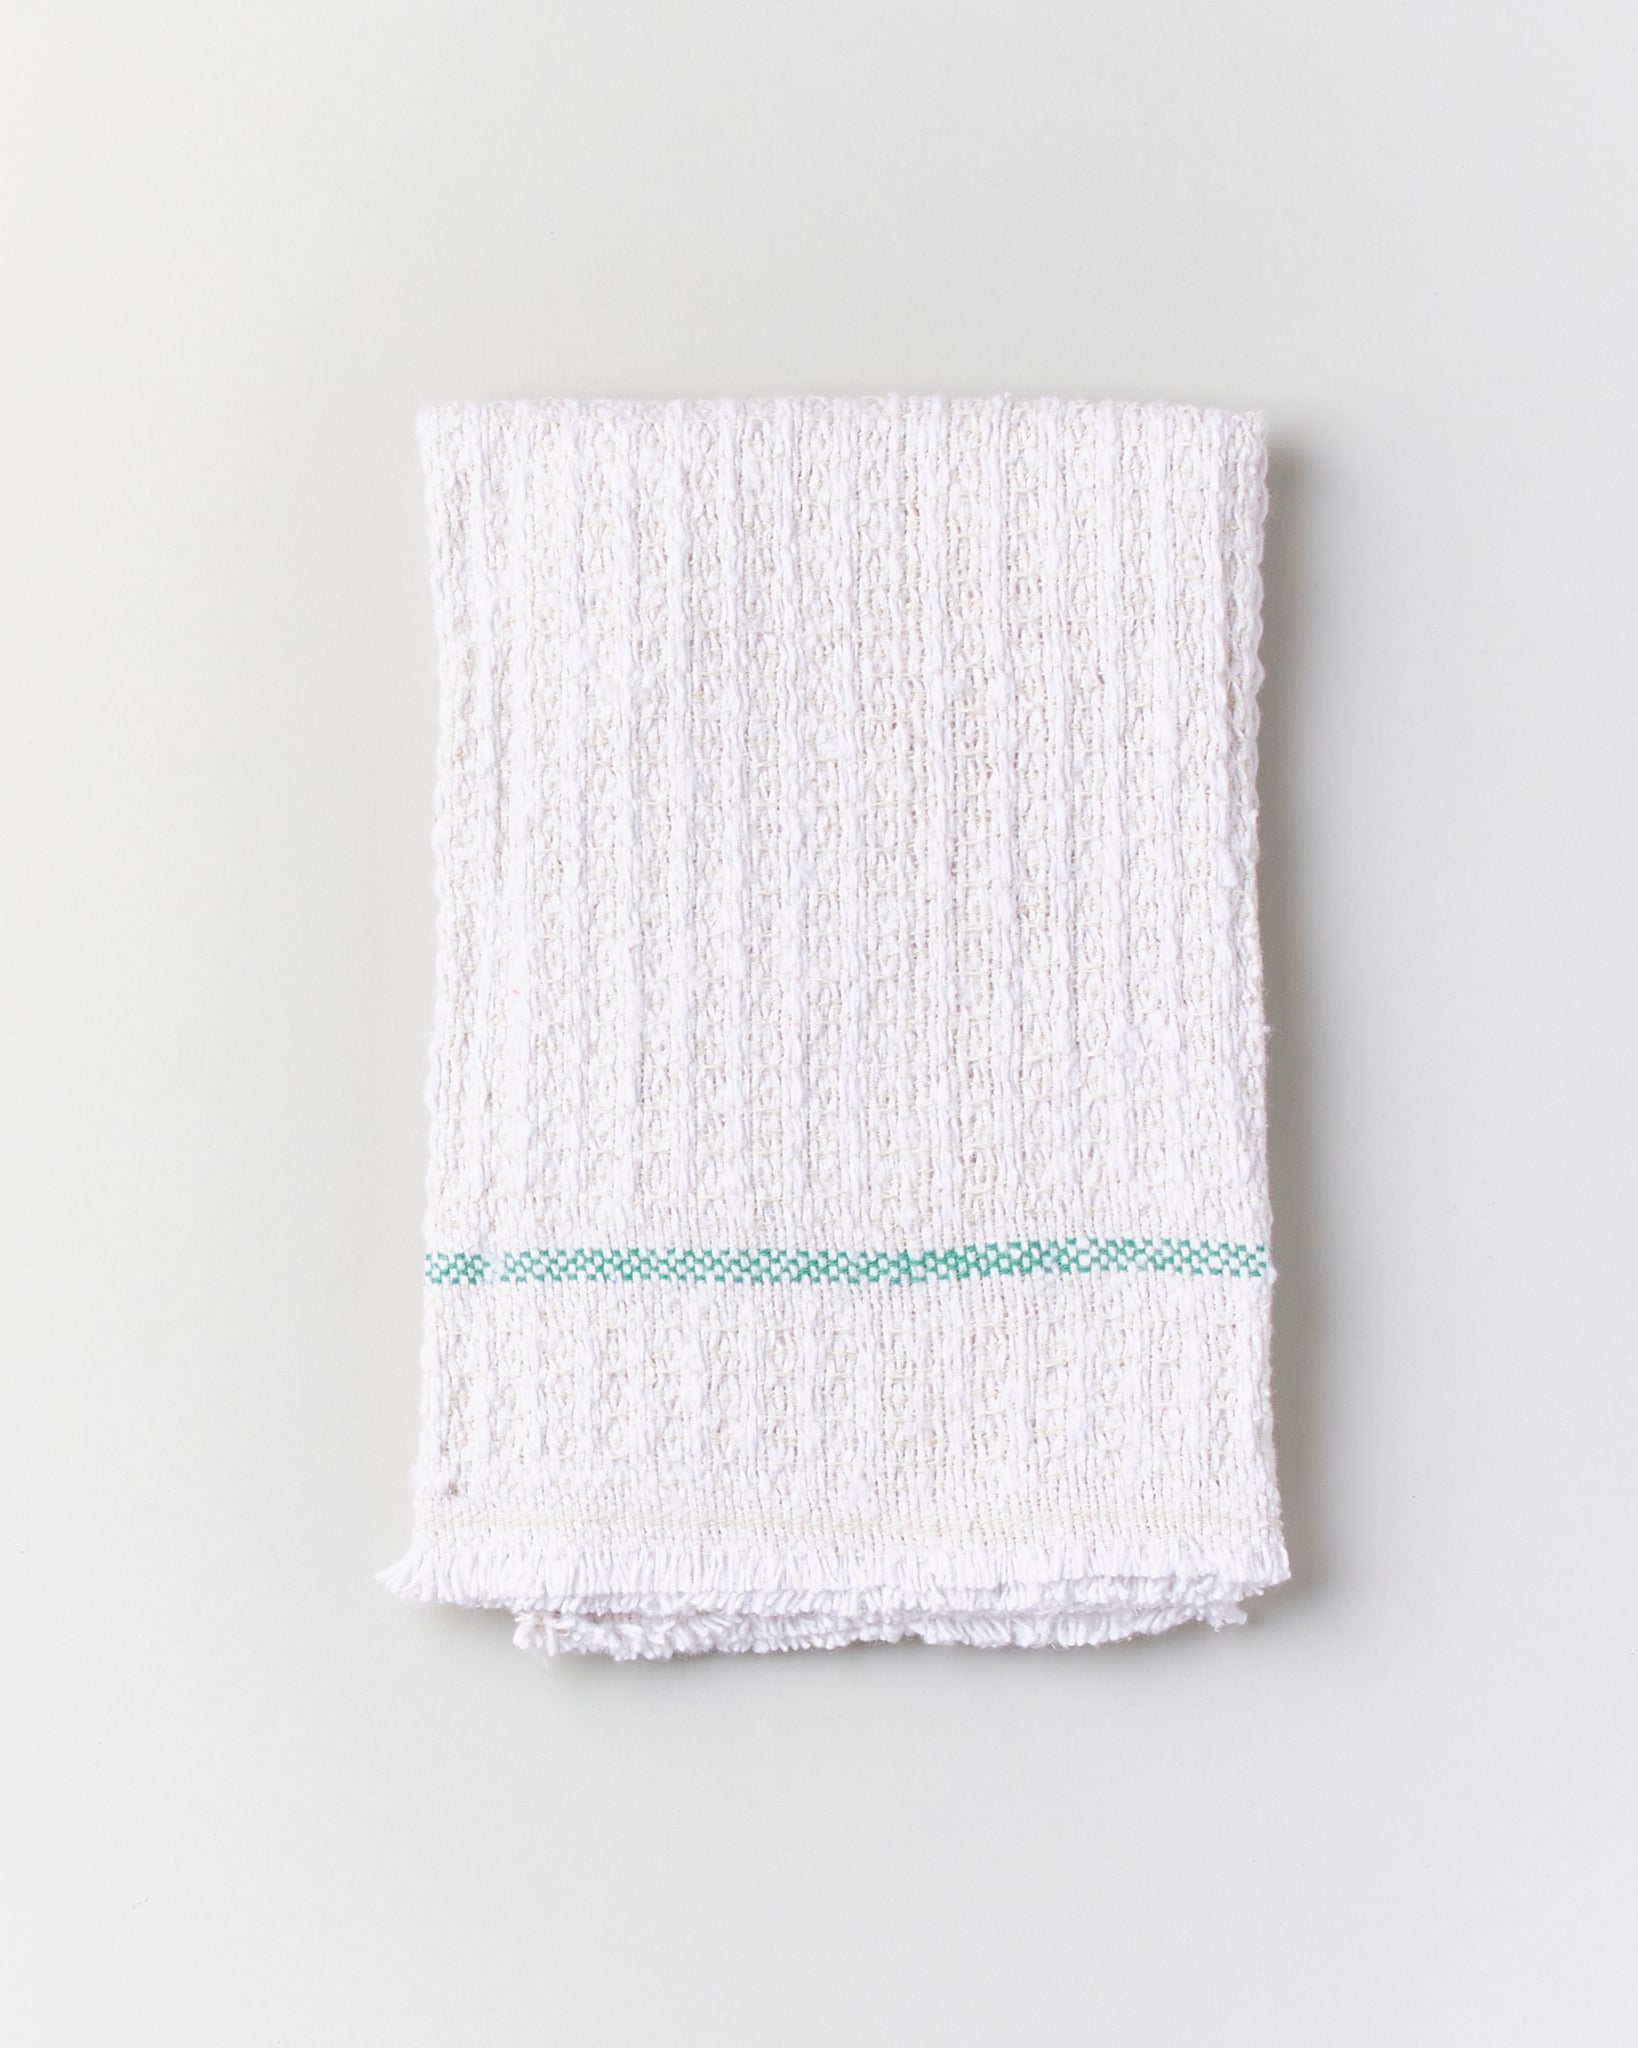 Iris Hantverk Knitted Organic Cotton Bath Towel, Solid, Natural